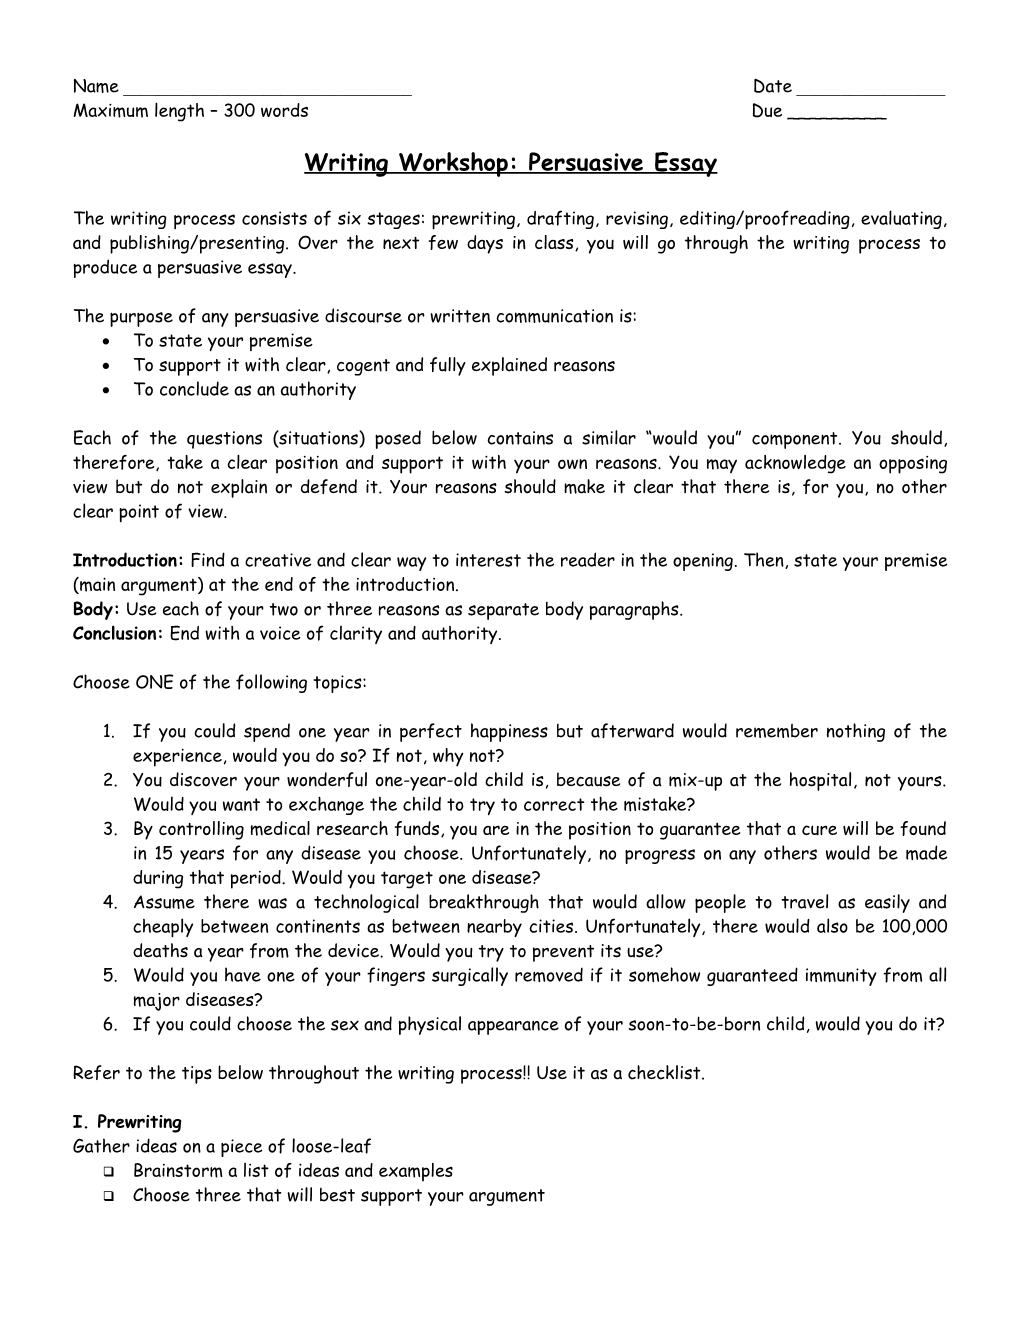 Writing Workshop: Persuasive Essay